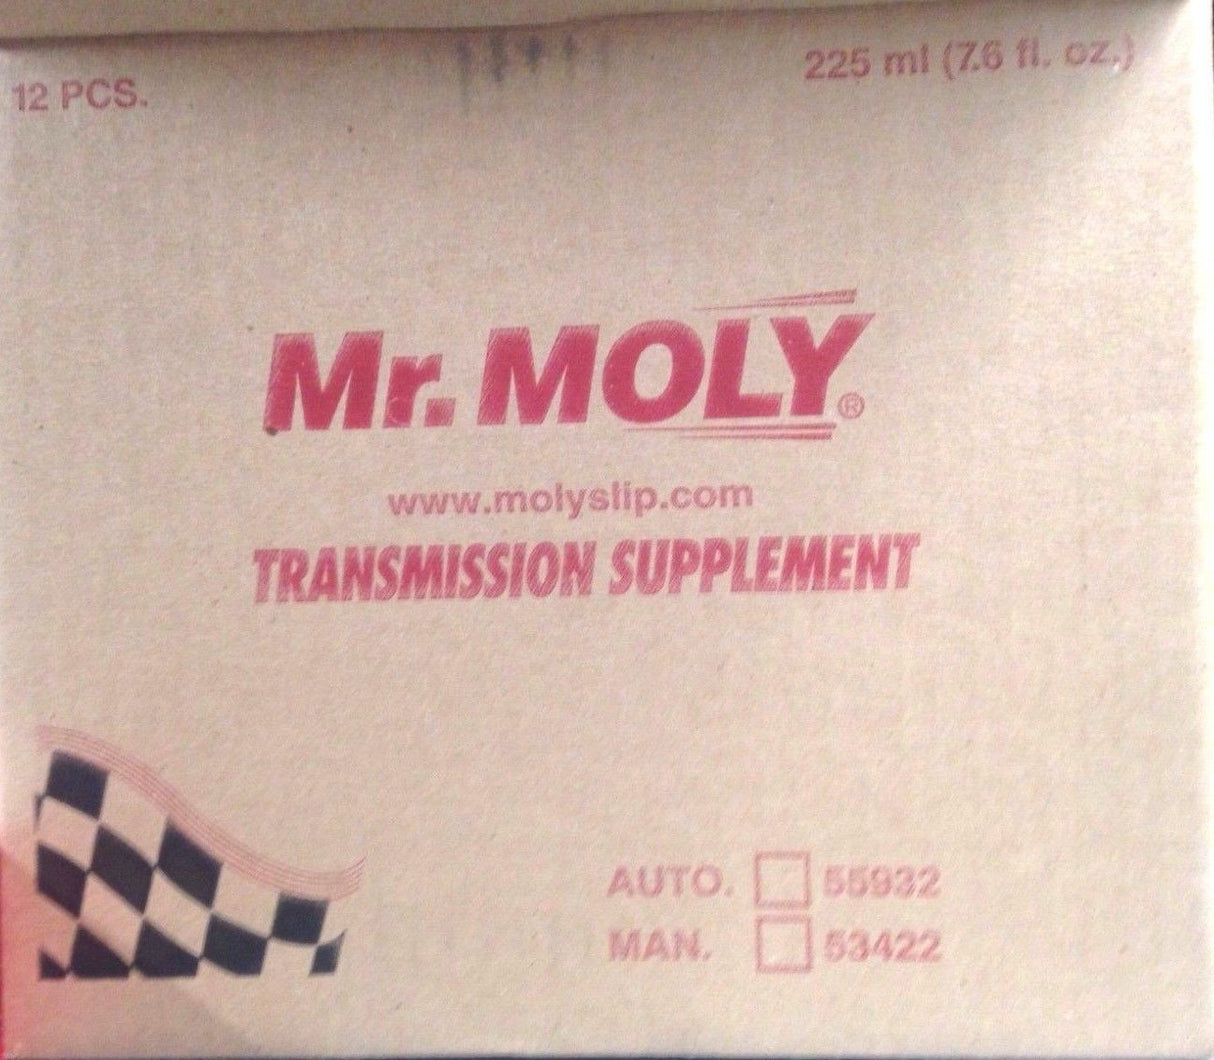 Molyslip 3422 Molyslip G Manual Transmission Supplement - 225mL - Case of 12